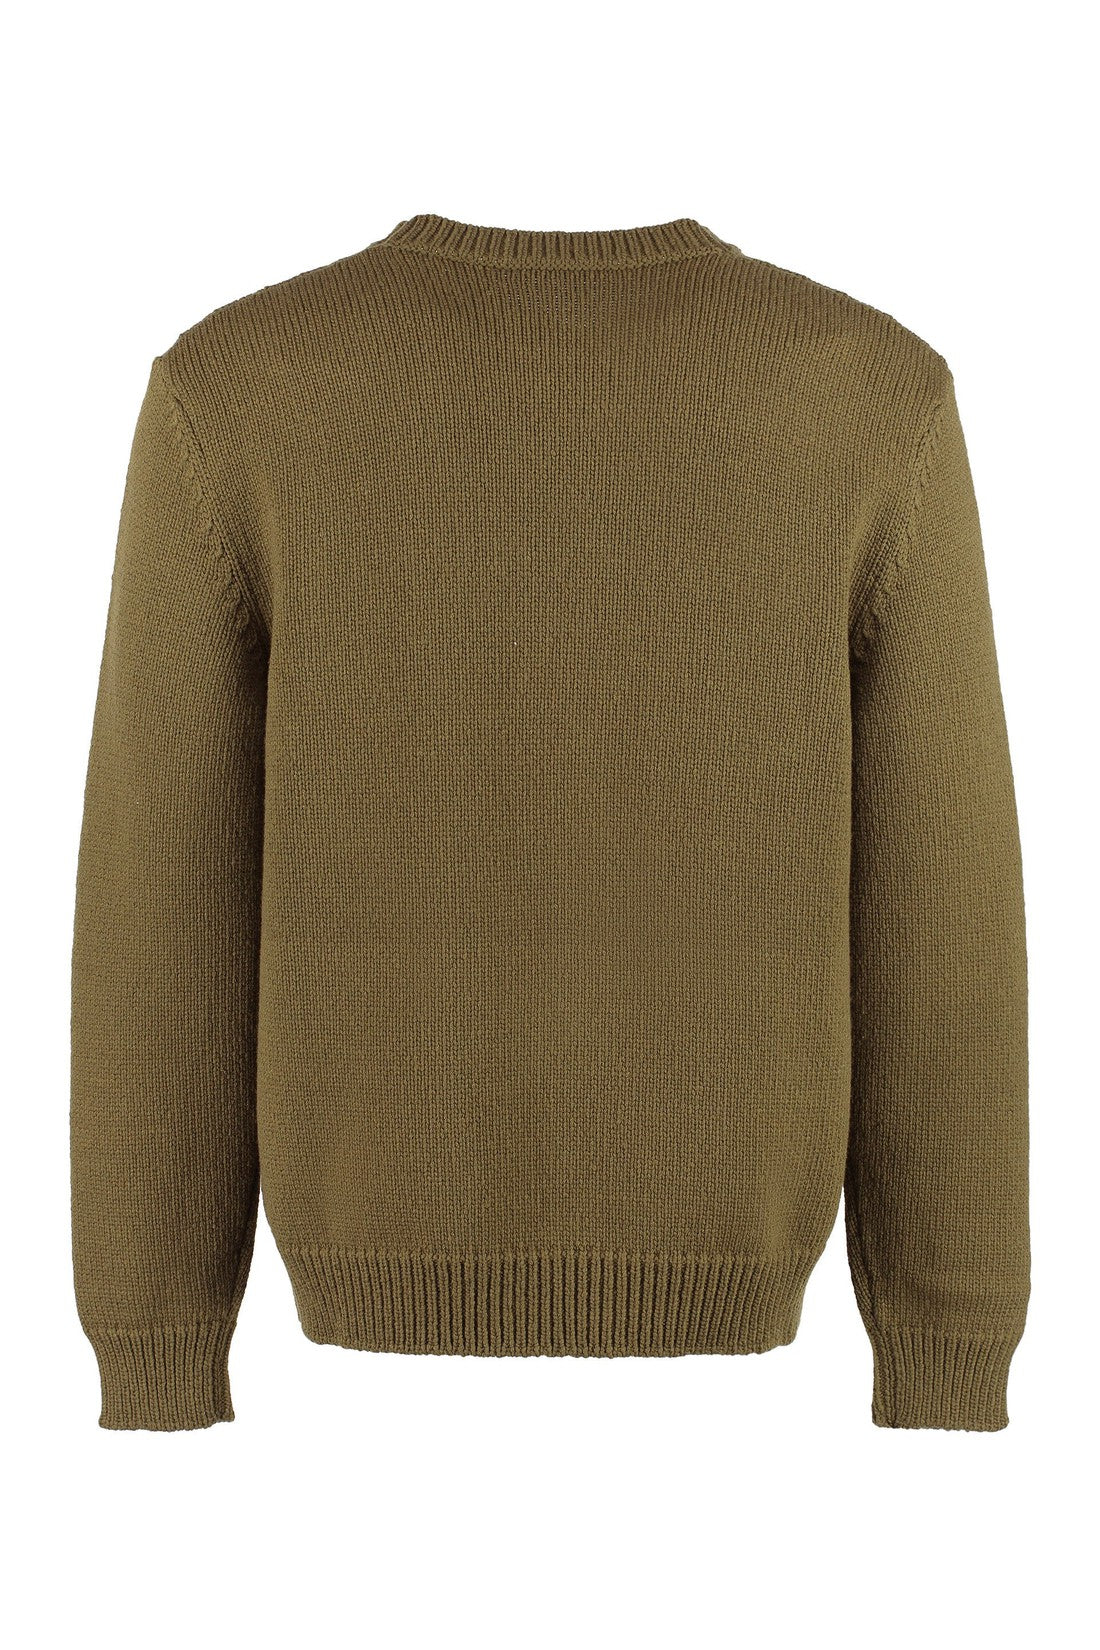 Balmain-OUTLET-SALE-Wool blend pullover-ARCHIVIST